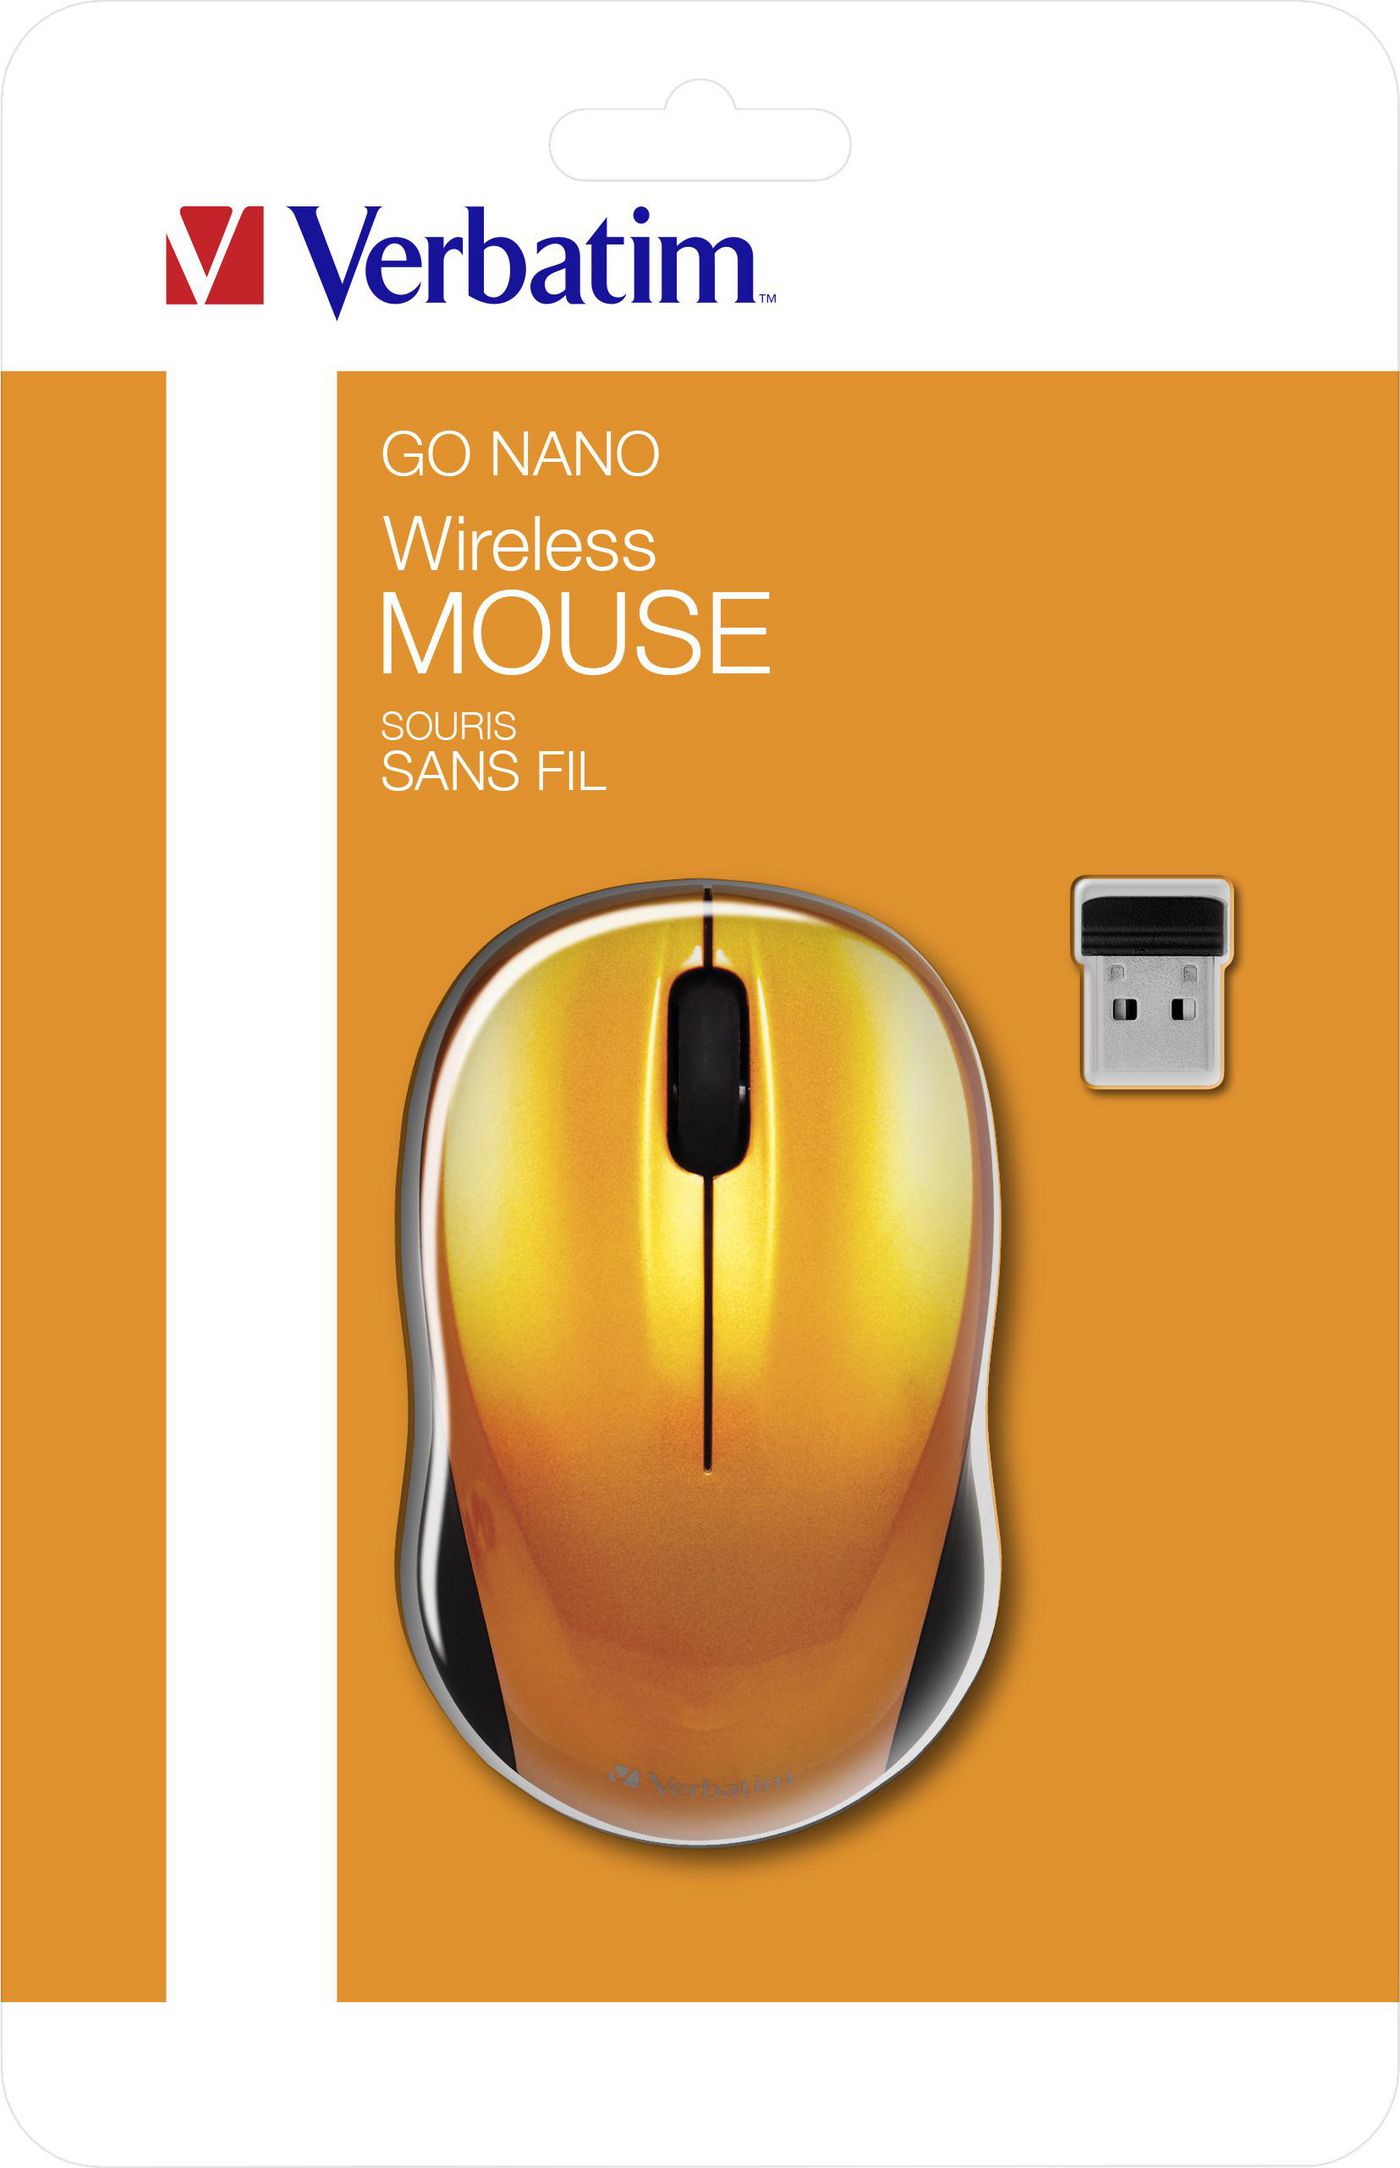 GO NANO Wireless Mouse